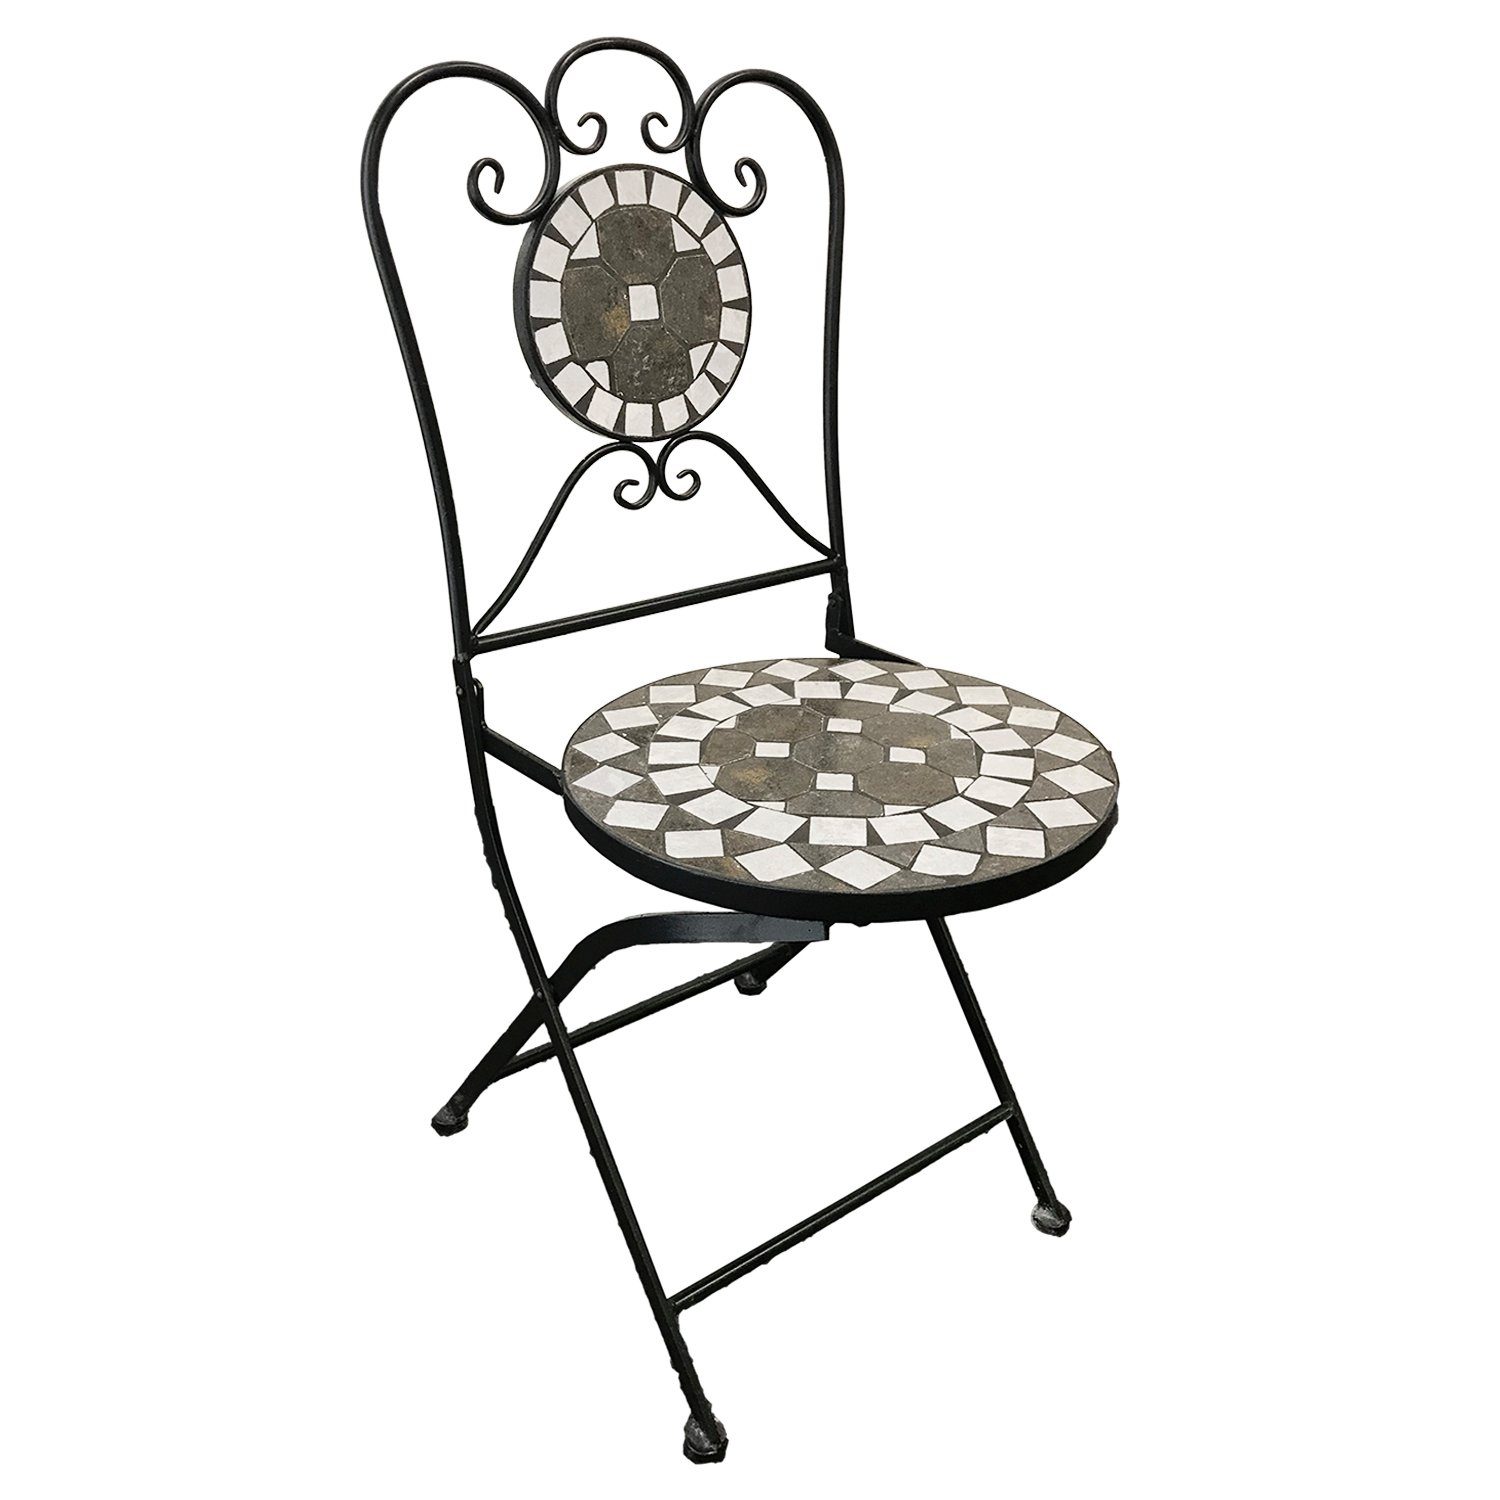 Mojawo Armlehnstuhl Mosaik Klappstuhl Kreis Design Anthrazit/Grau | Stühle